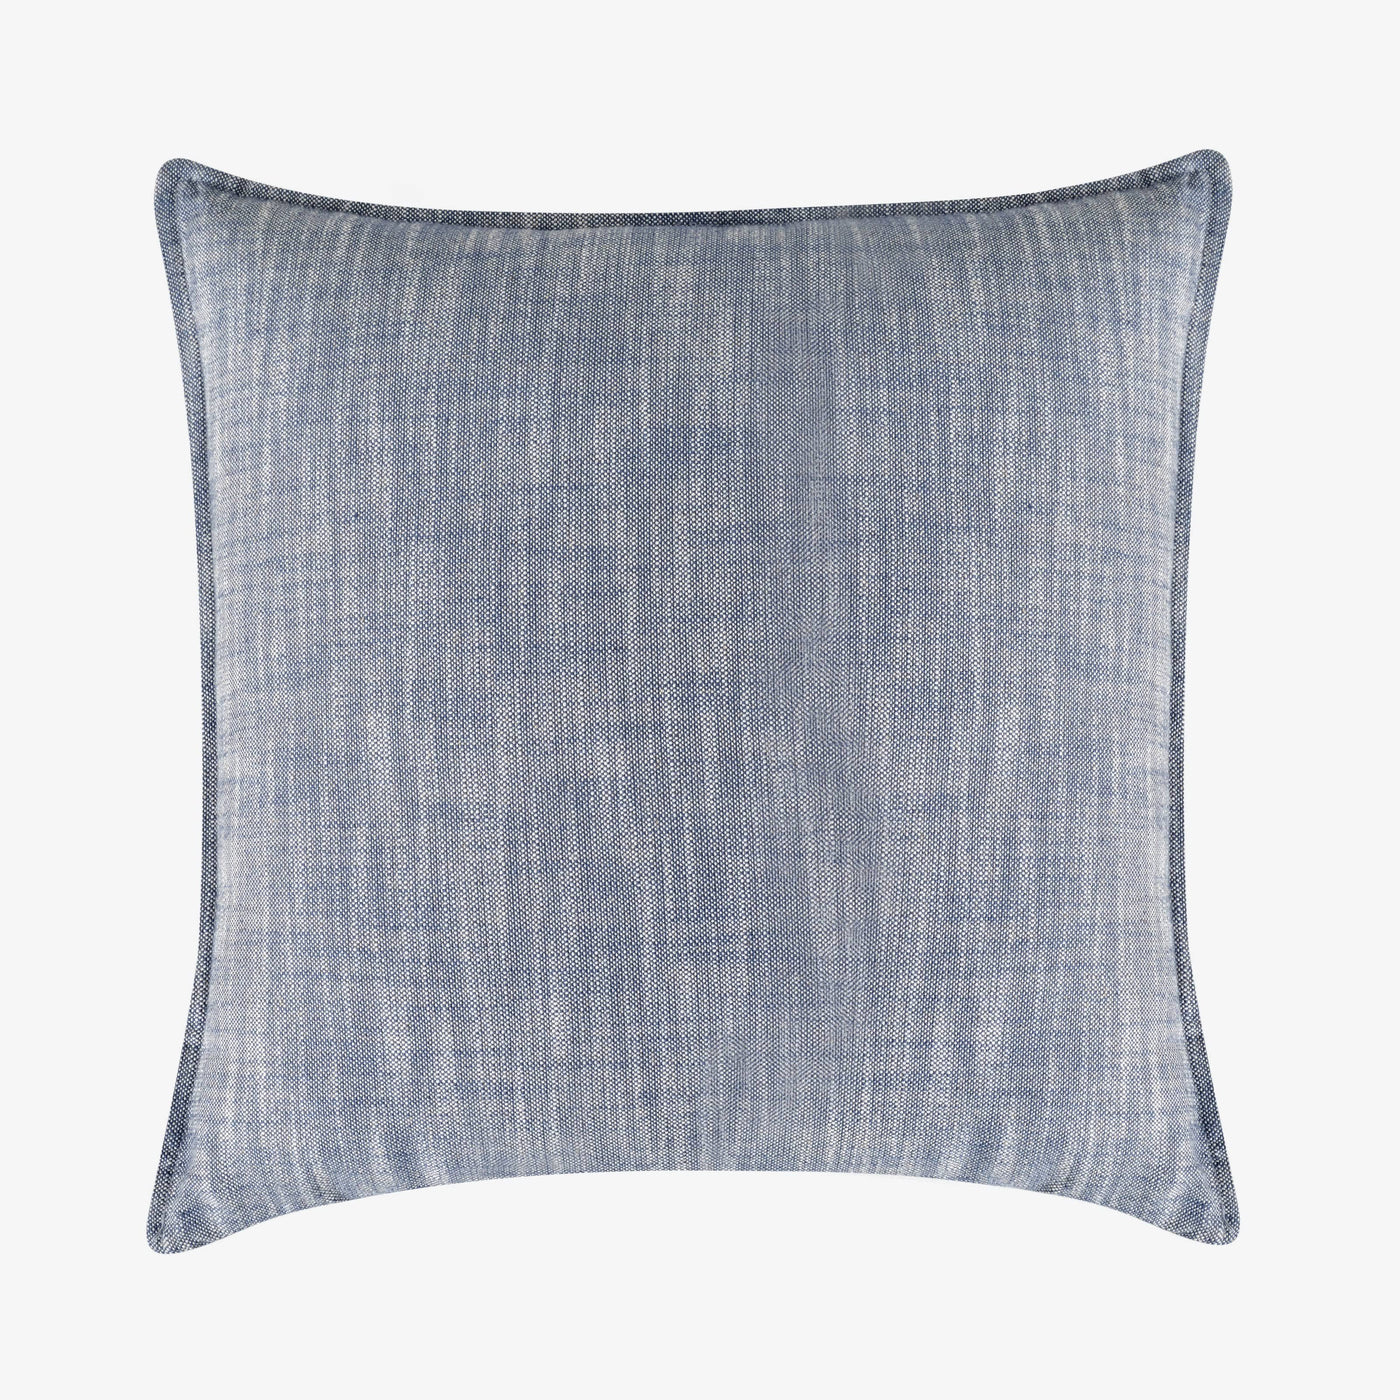 Optical Textured Cushion Cover, Blue, 50x50 cm Cushion Covers sazy.com